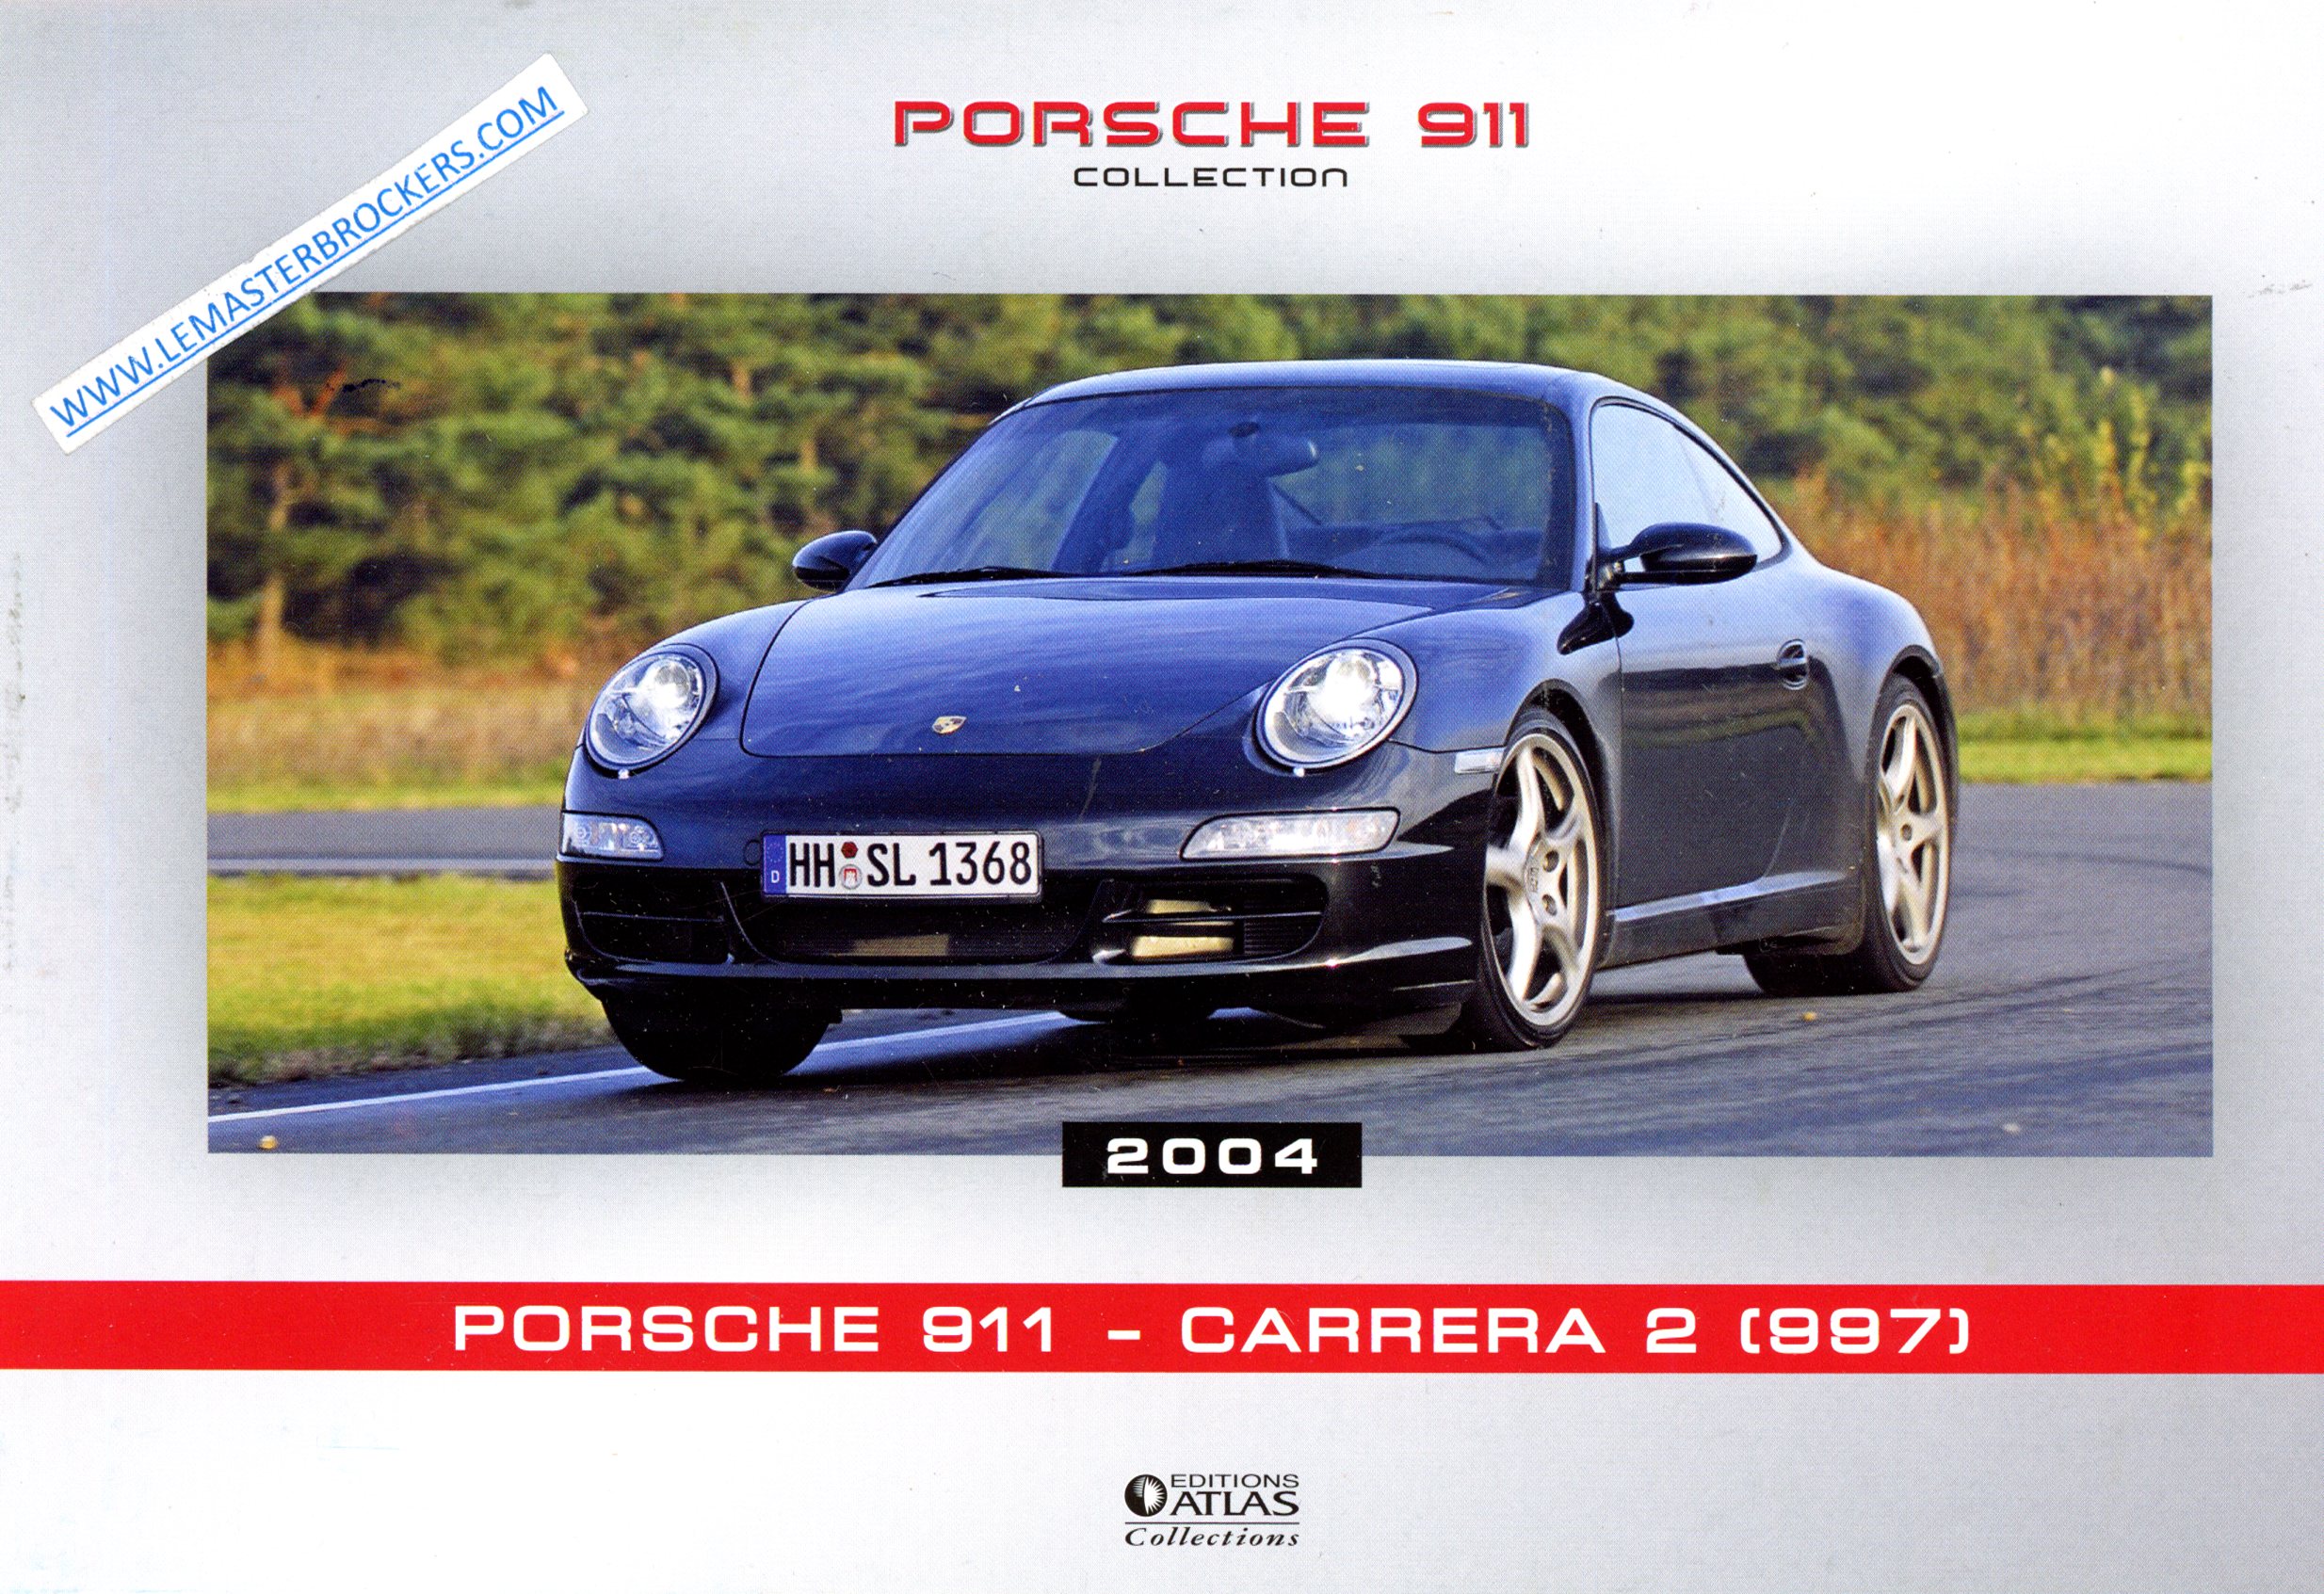 PORSCHE 911 CARRERA 2 997 2004